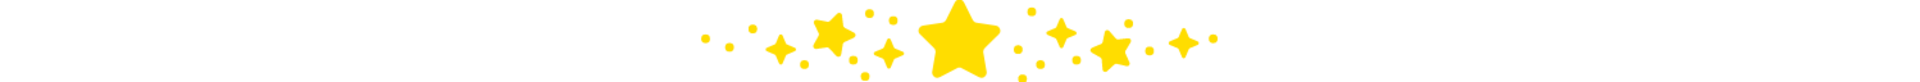 Star Flurry Banner - Spacing